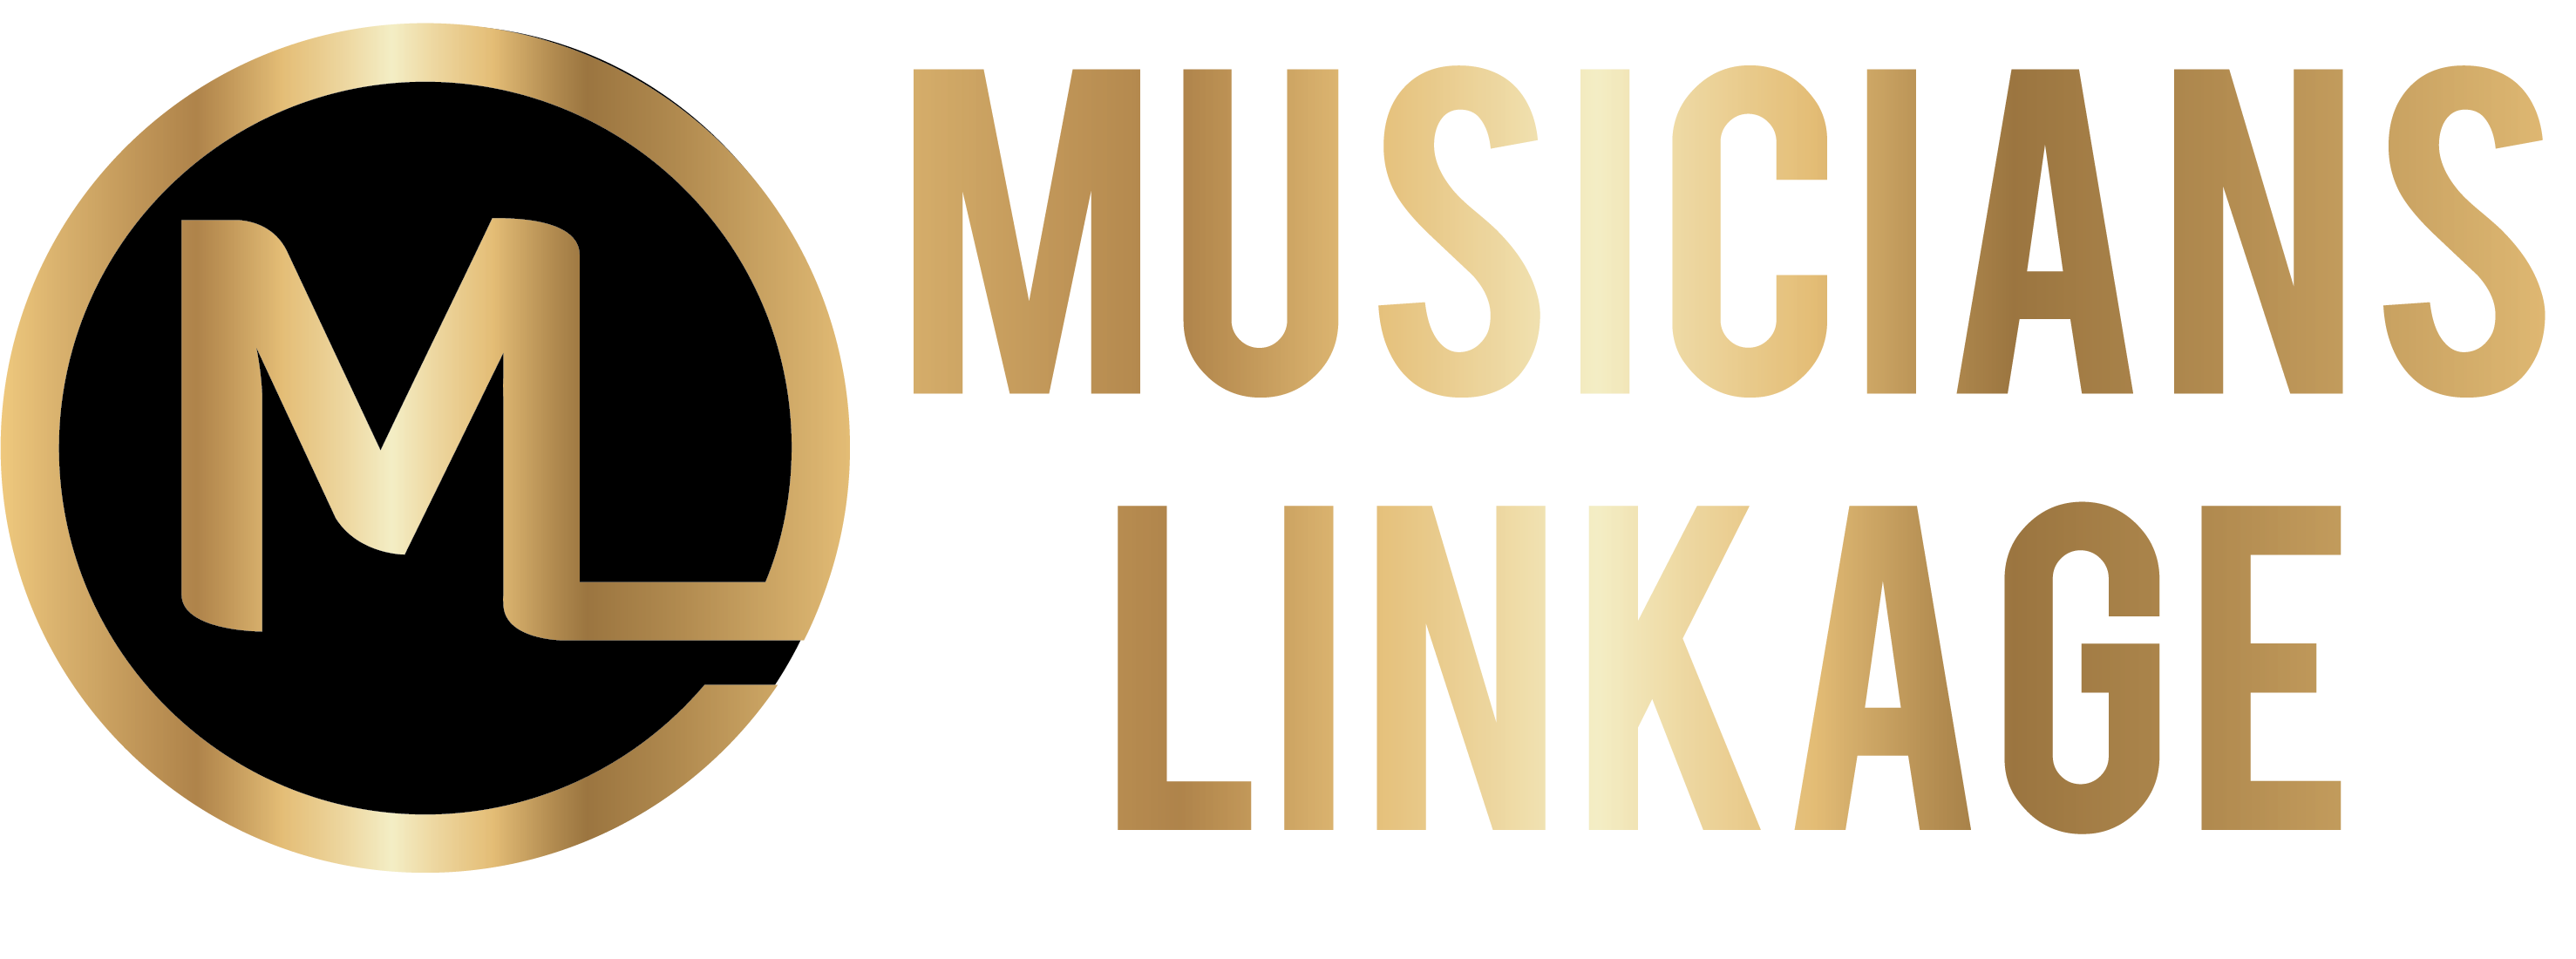 MUSICIANS LINKAGE